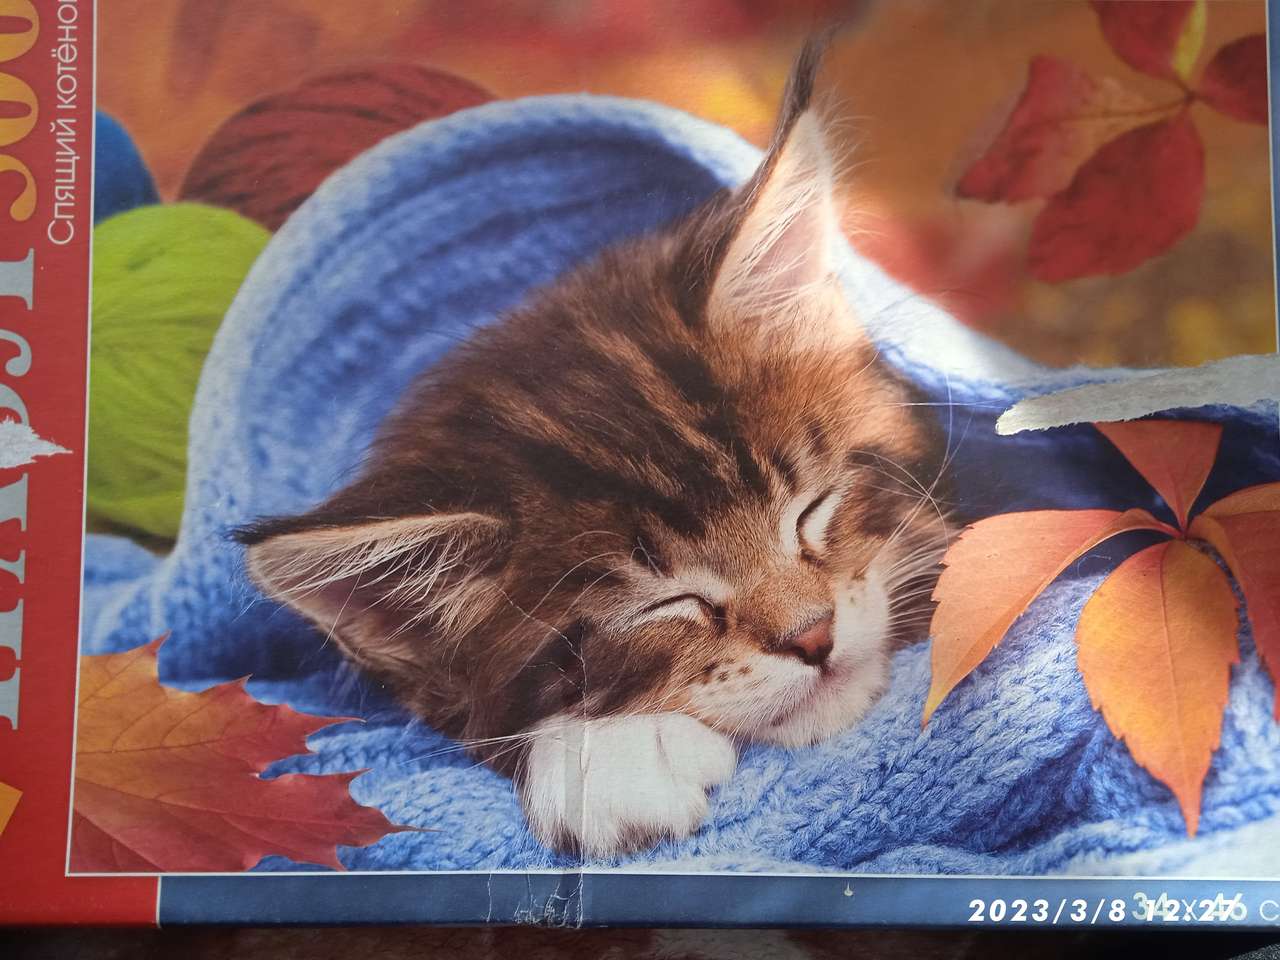 śpiący kotek puzzle online ze zdjęcia